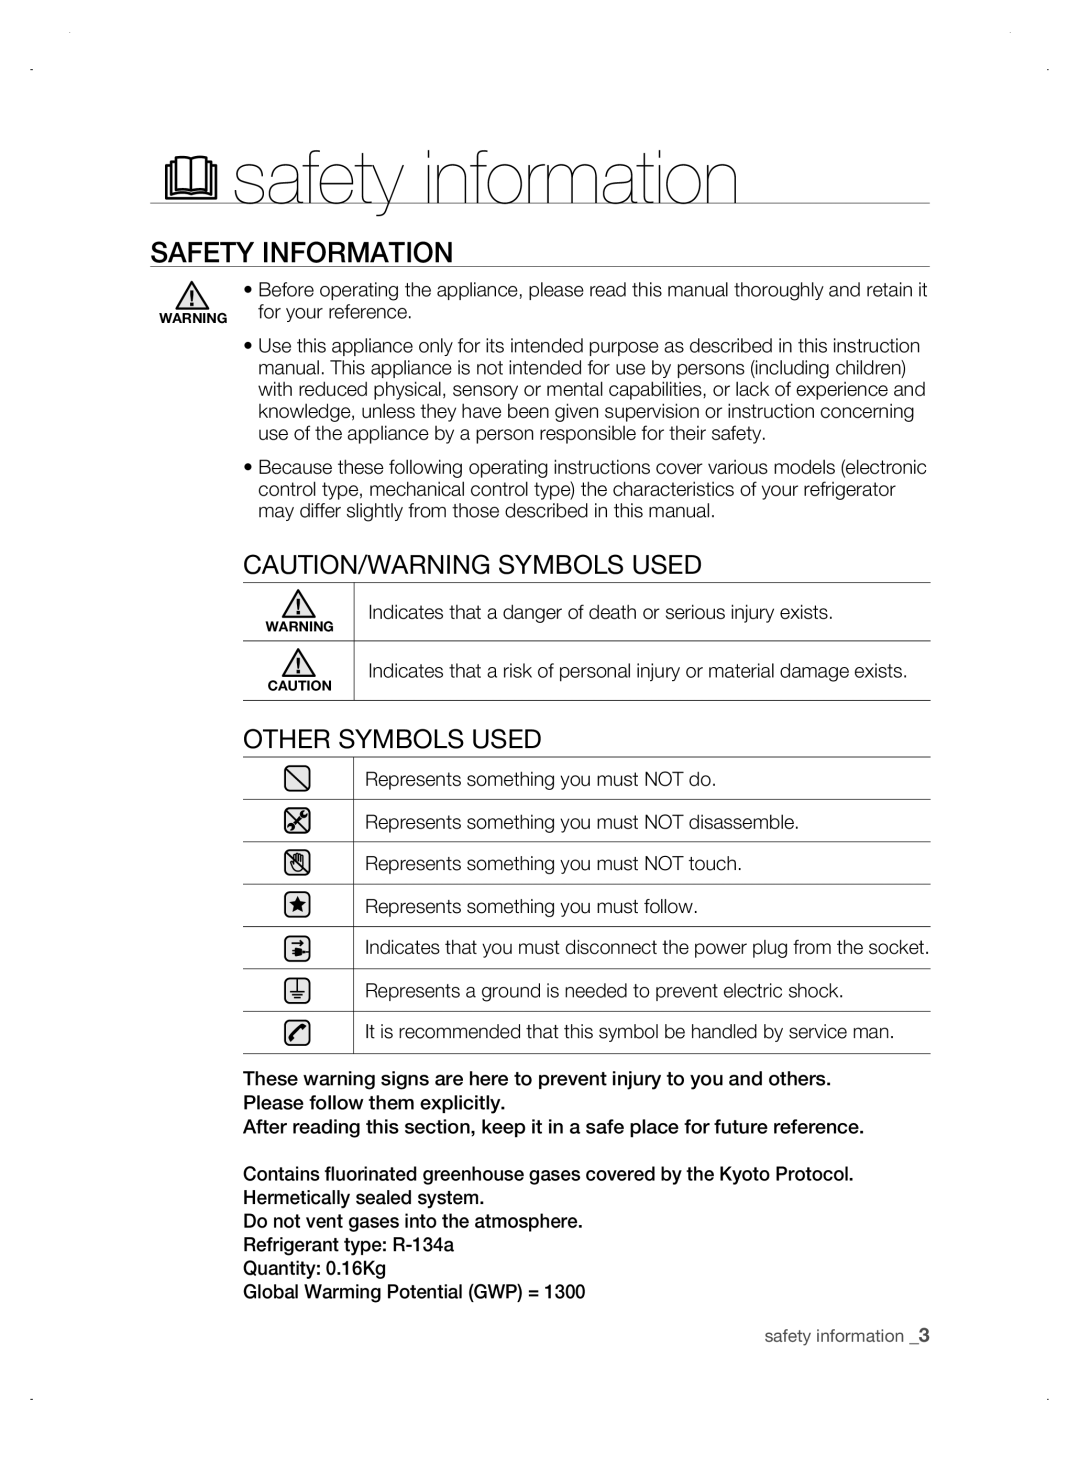 Samsung DA99-01906A user manual safety information, safEty inforMation, Caution/Warning Symbols Used, Other Symbols Used 